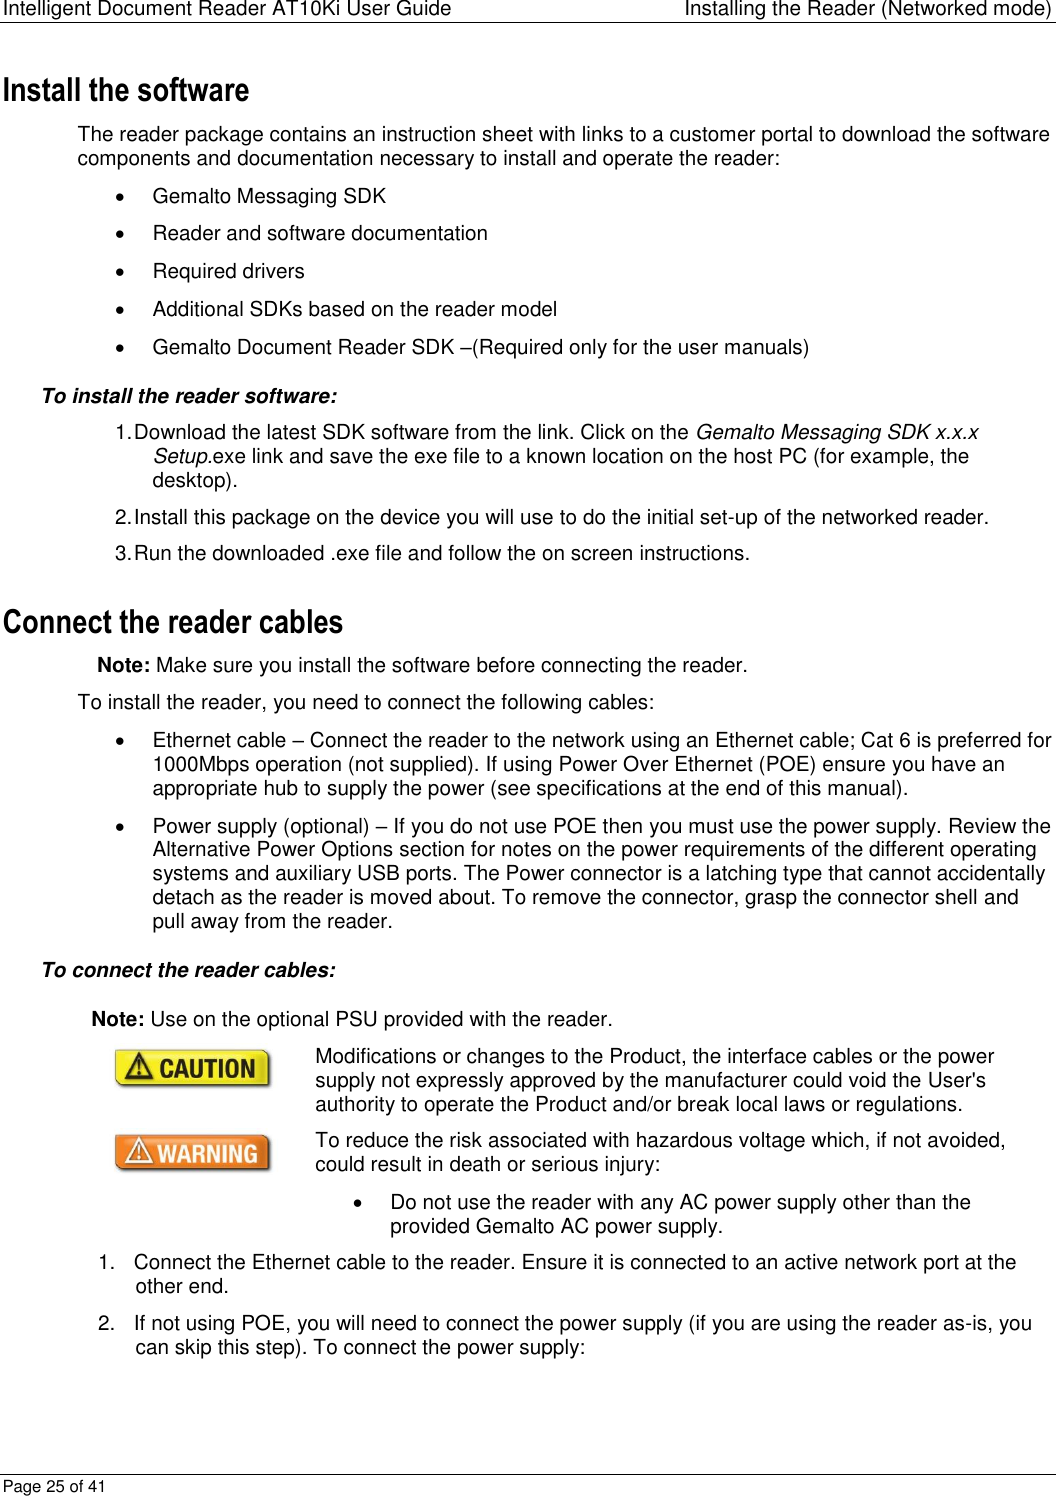 Page 25 of Thales DIS USA PR01523 ation Scanner User Manual